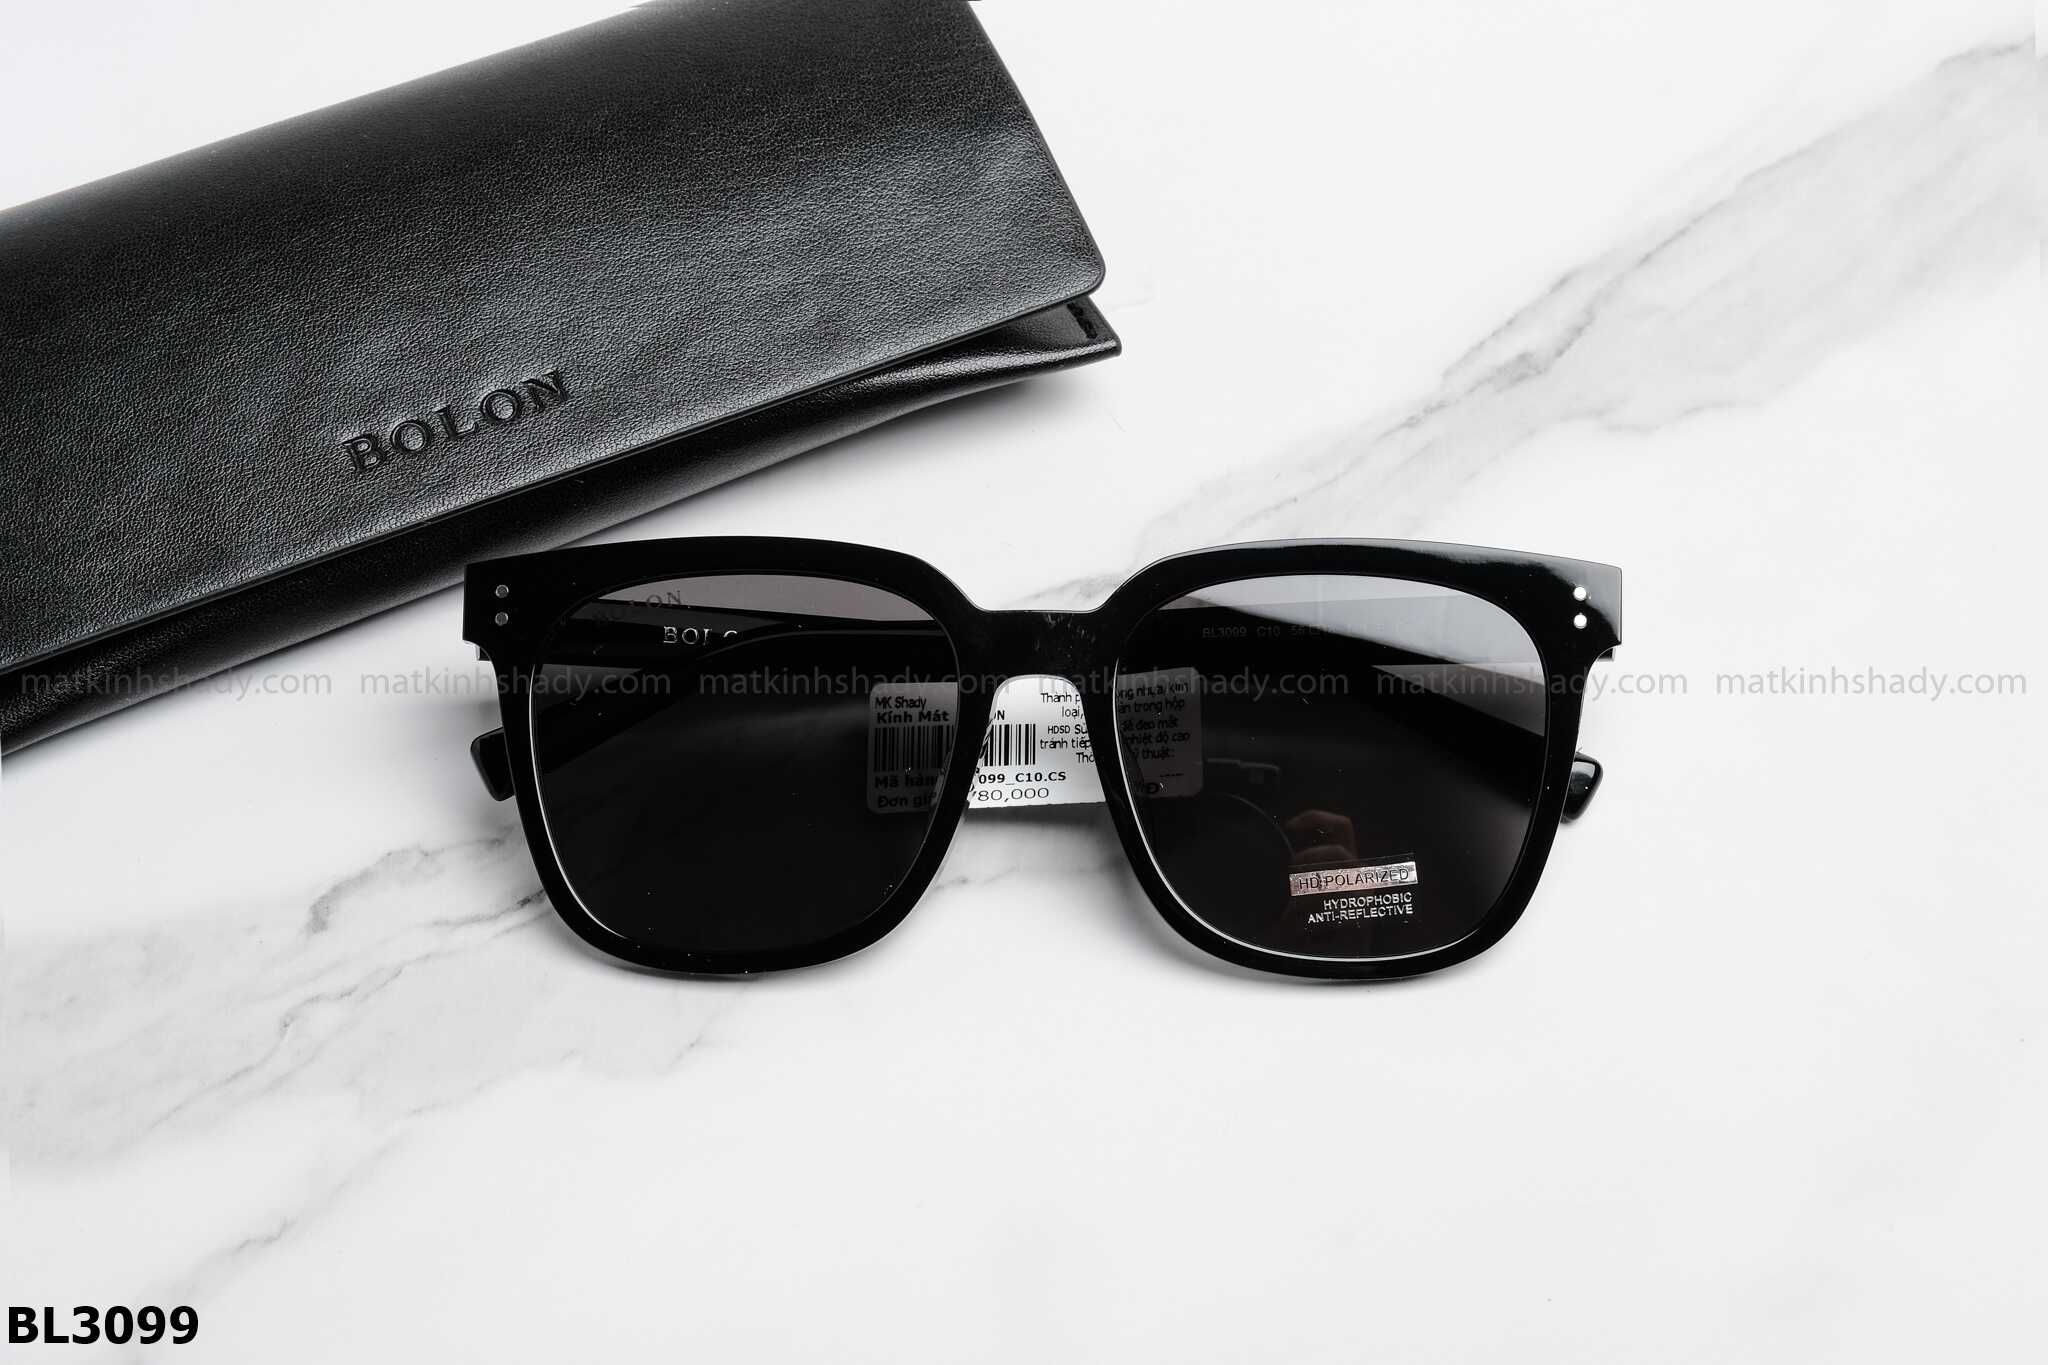  Bolon Eyewear - Sunglasses - BL3099 